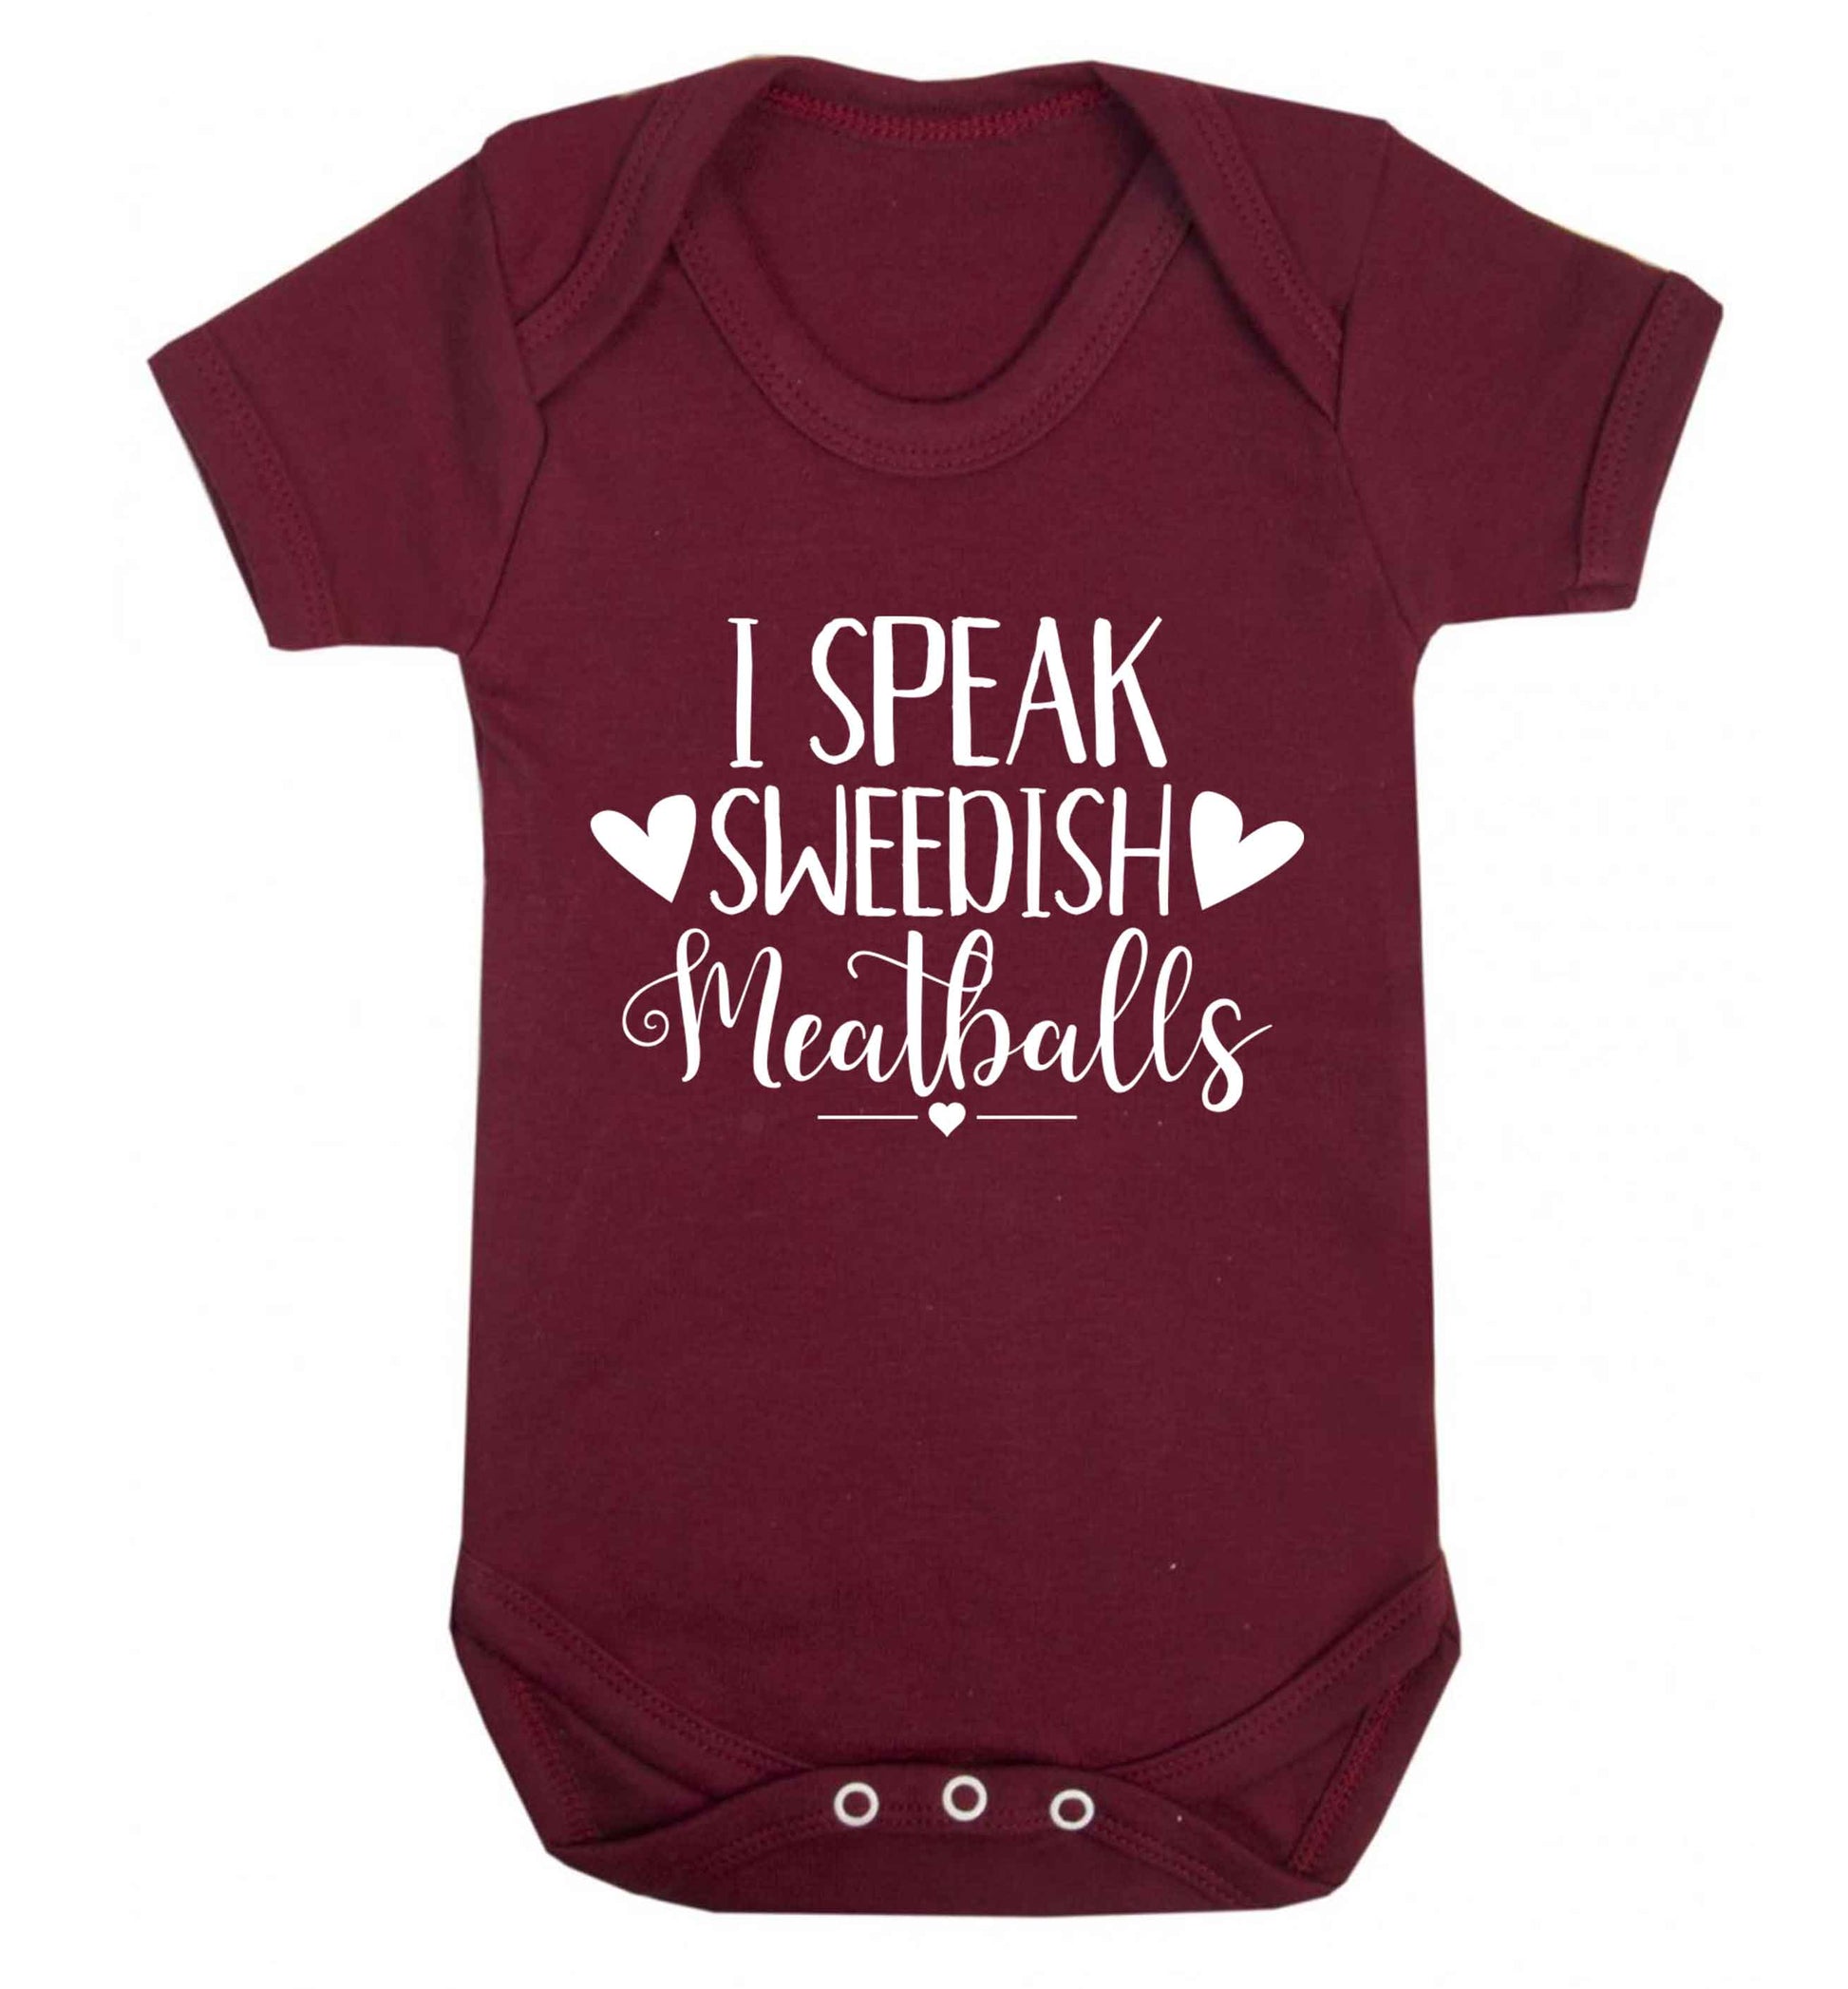 I speak sweedish...meatballs Baby Vest maroon 18-24 months